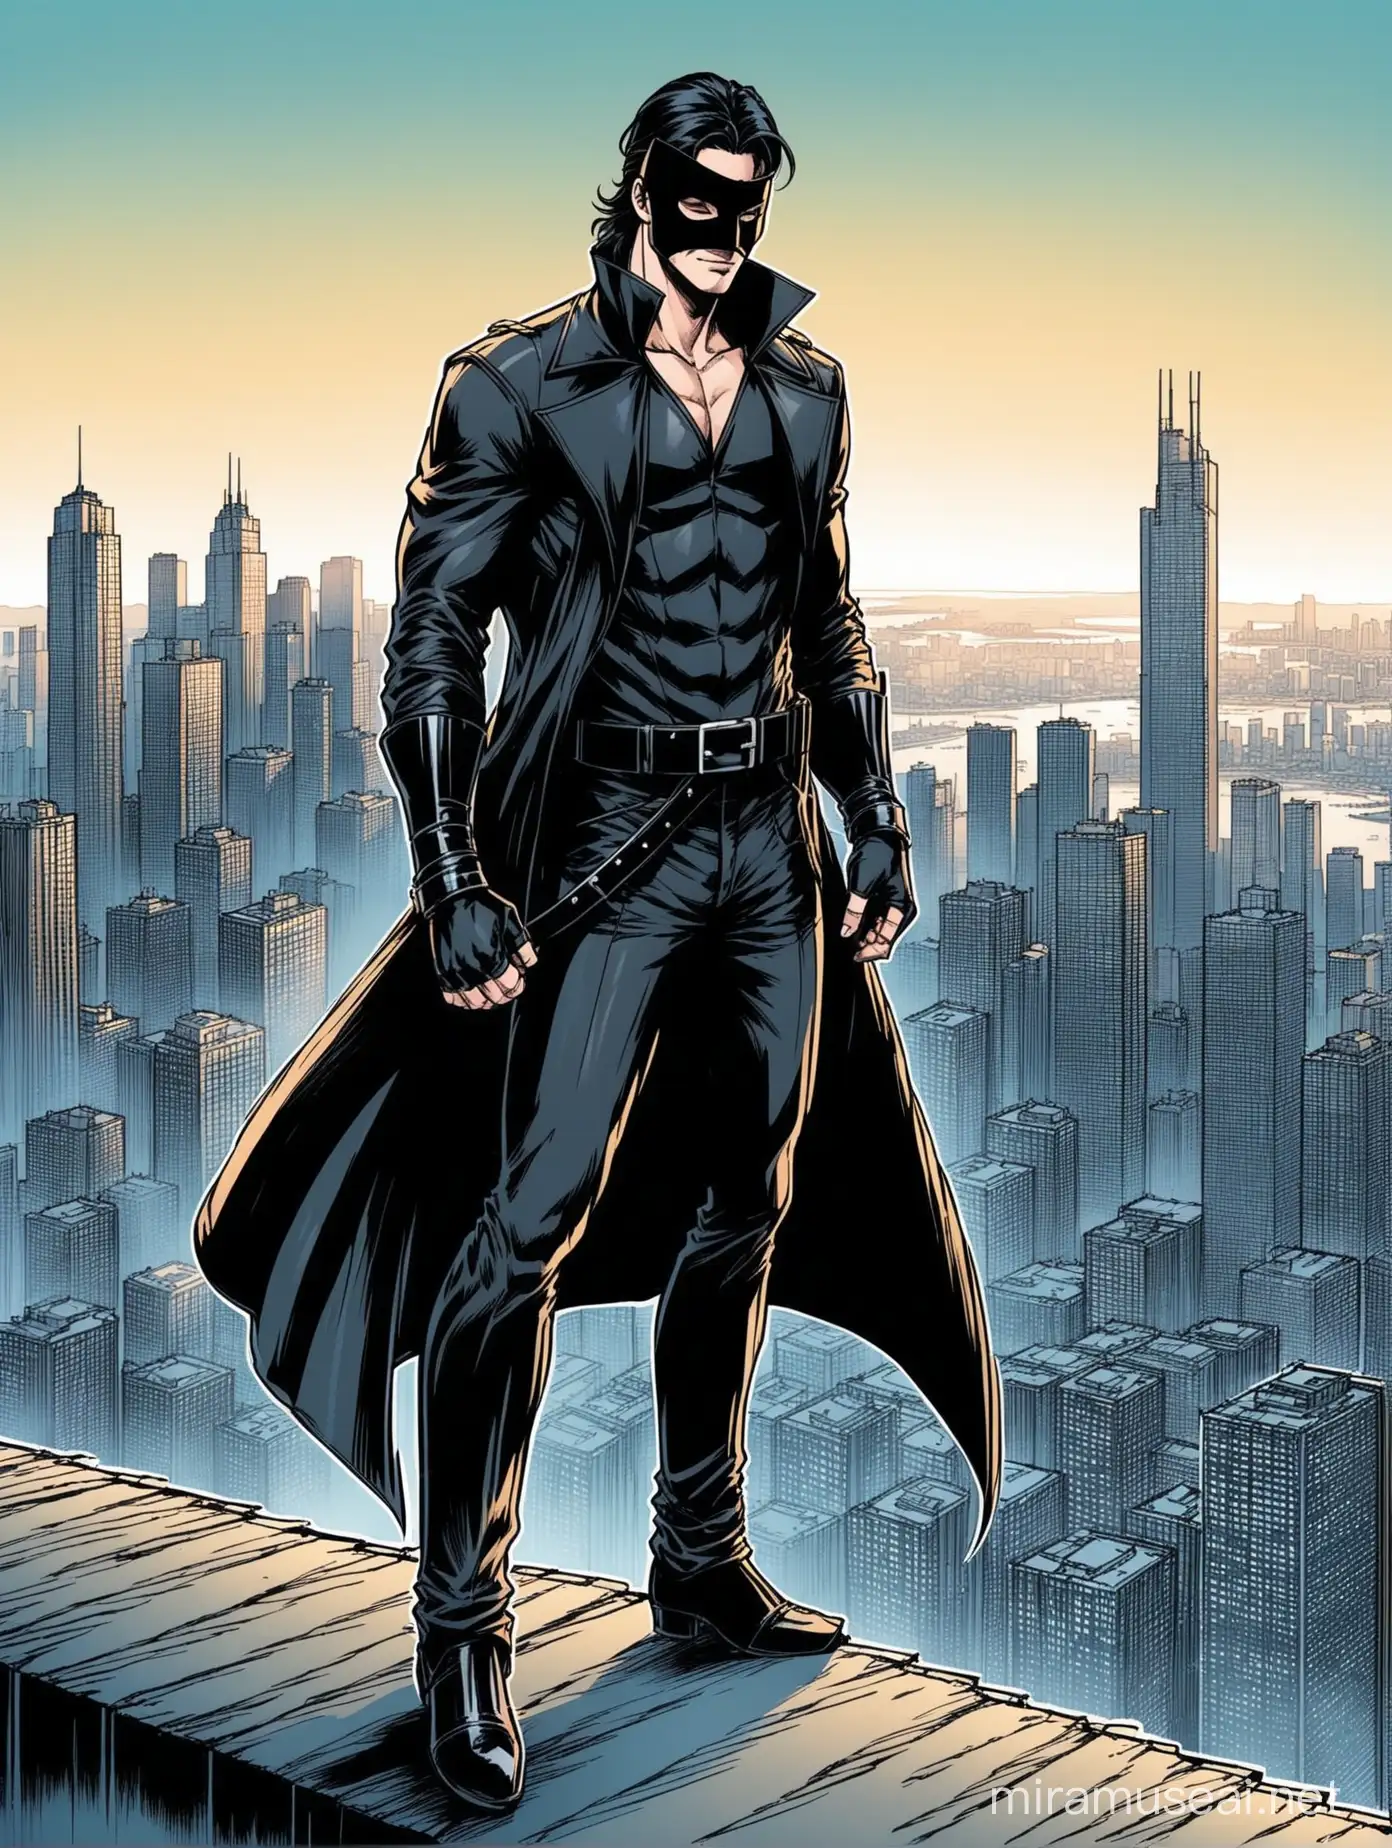 Dark Avenger Urban Vigilante Stands Tall Over City Skyline